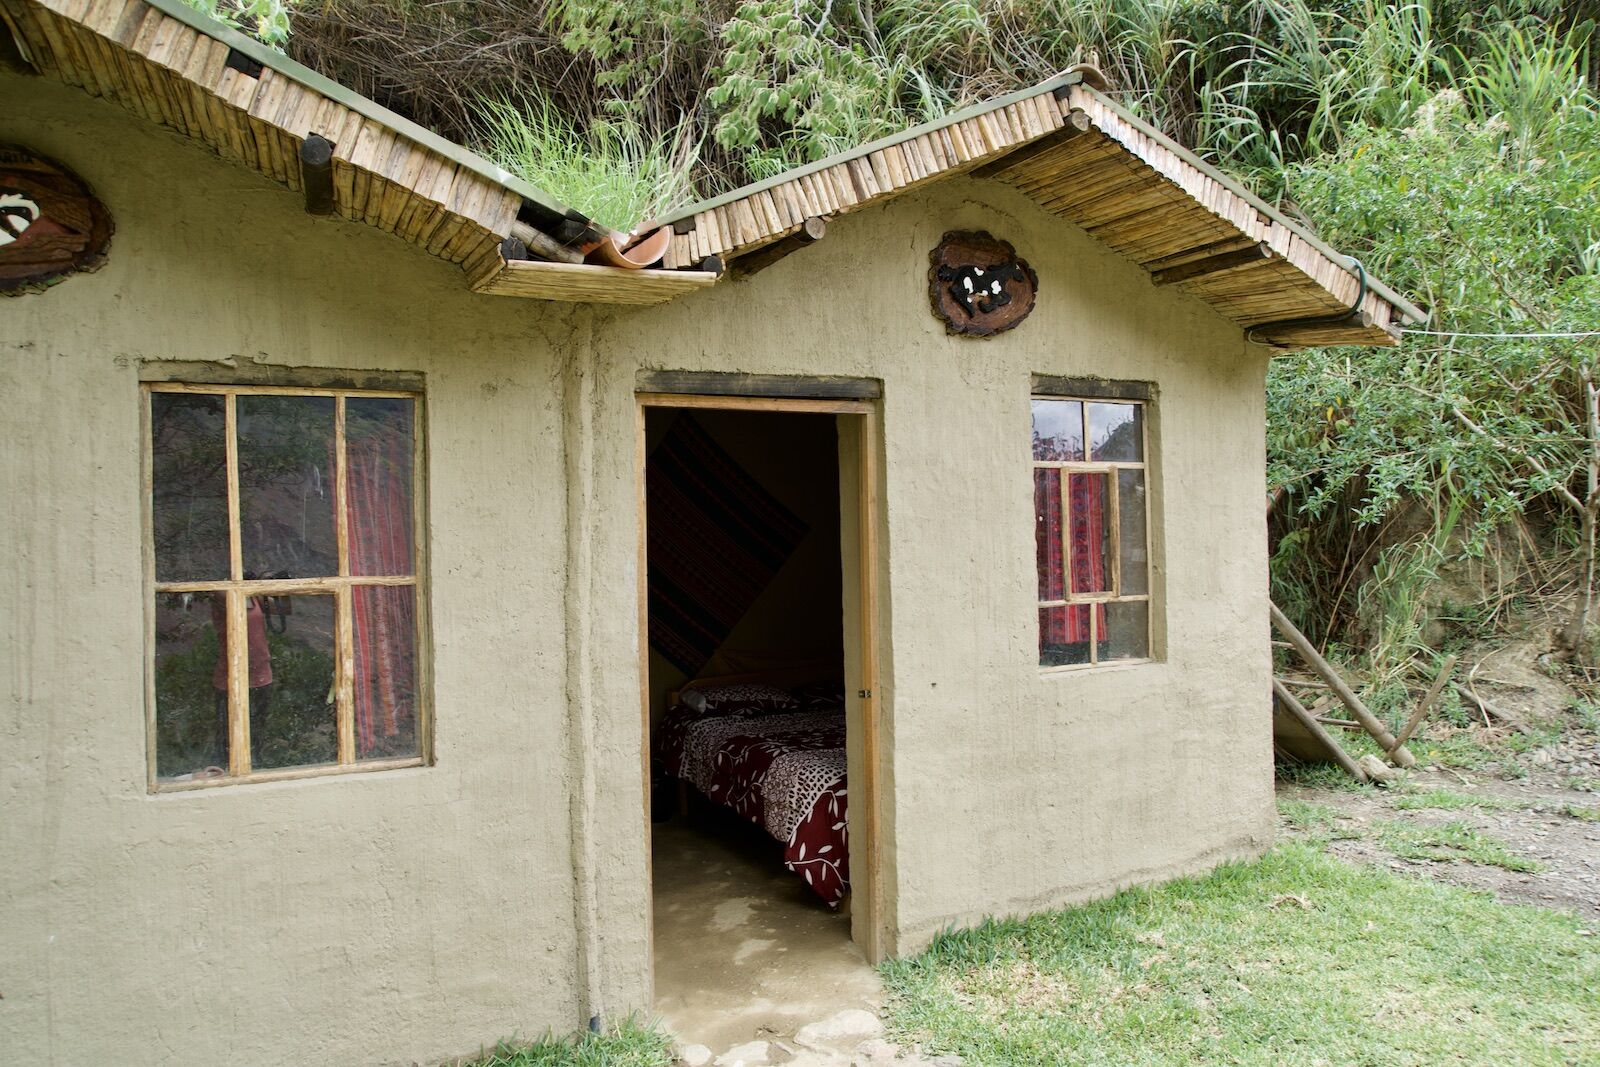 Cabins built by Maykol Connaya Puga along the Choquequirao trek